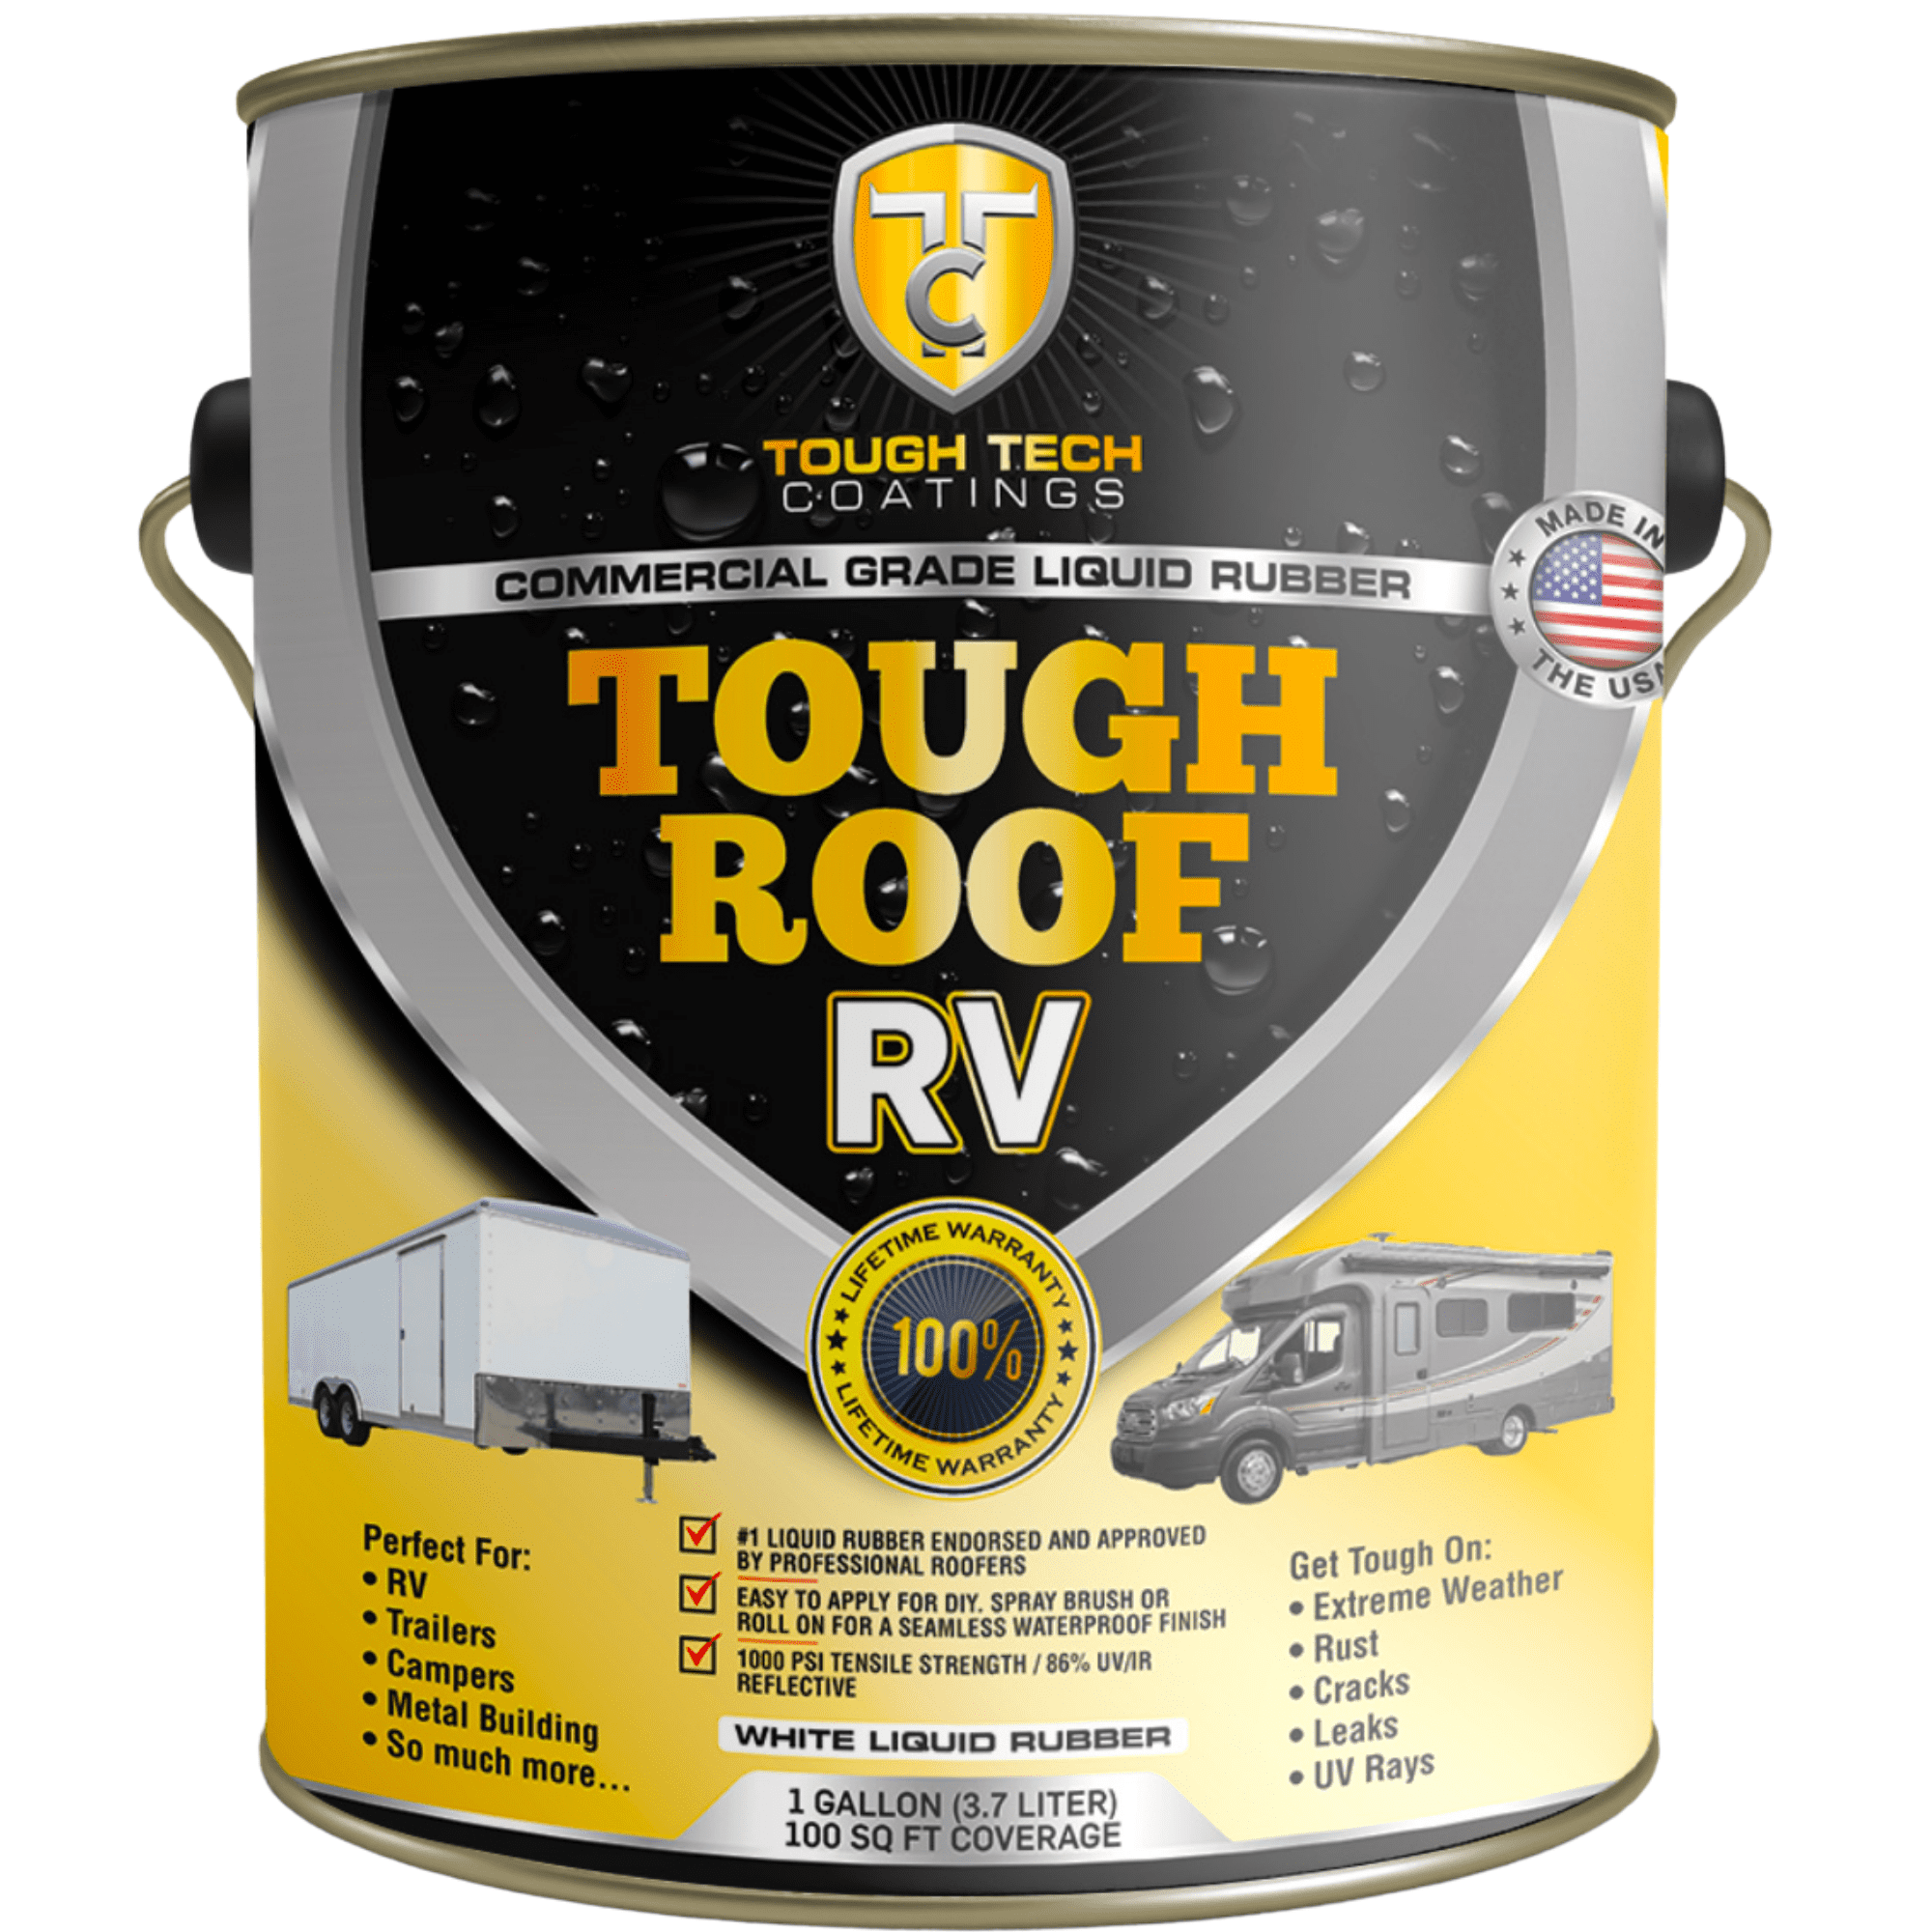 Tough Tech Coatings Tough Roof RV Liquid Rubber